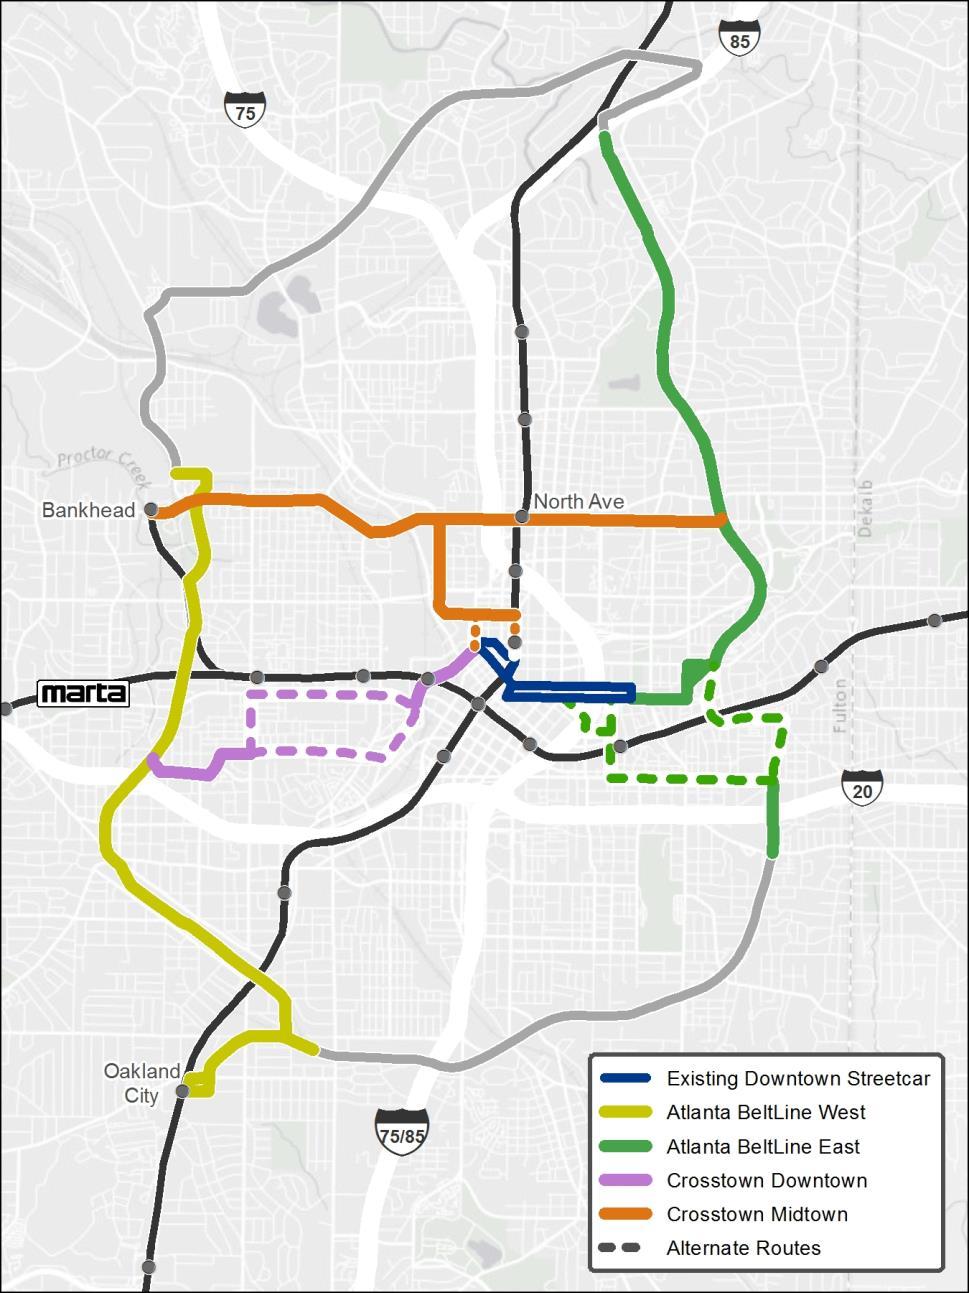 NEPA 1 - Transit Alignments 4 Corridors Atlanta BeltLine East Atlanta BeltLine